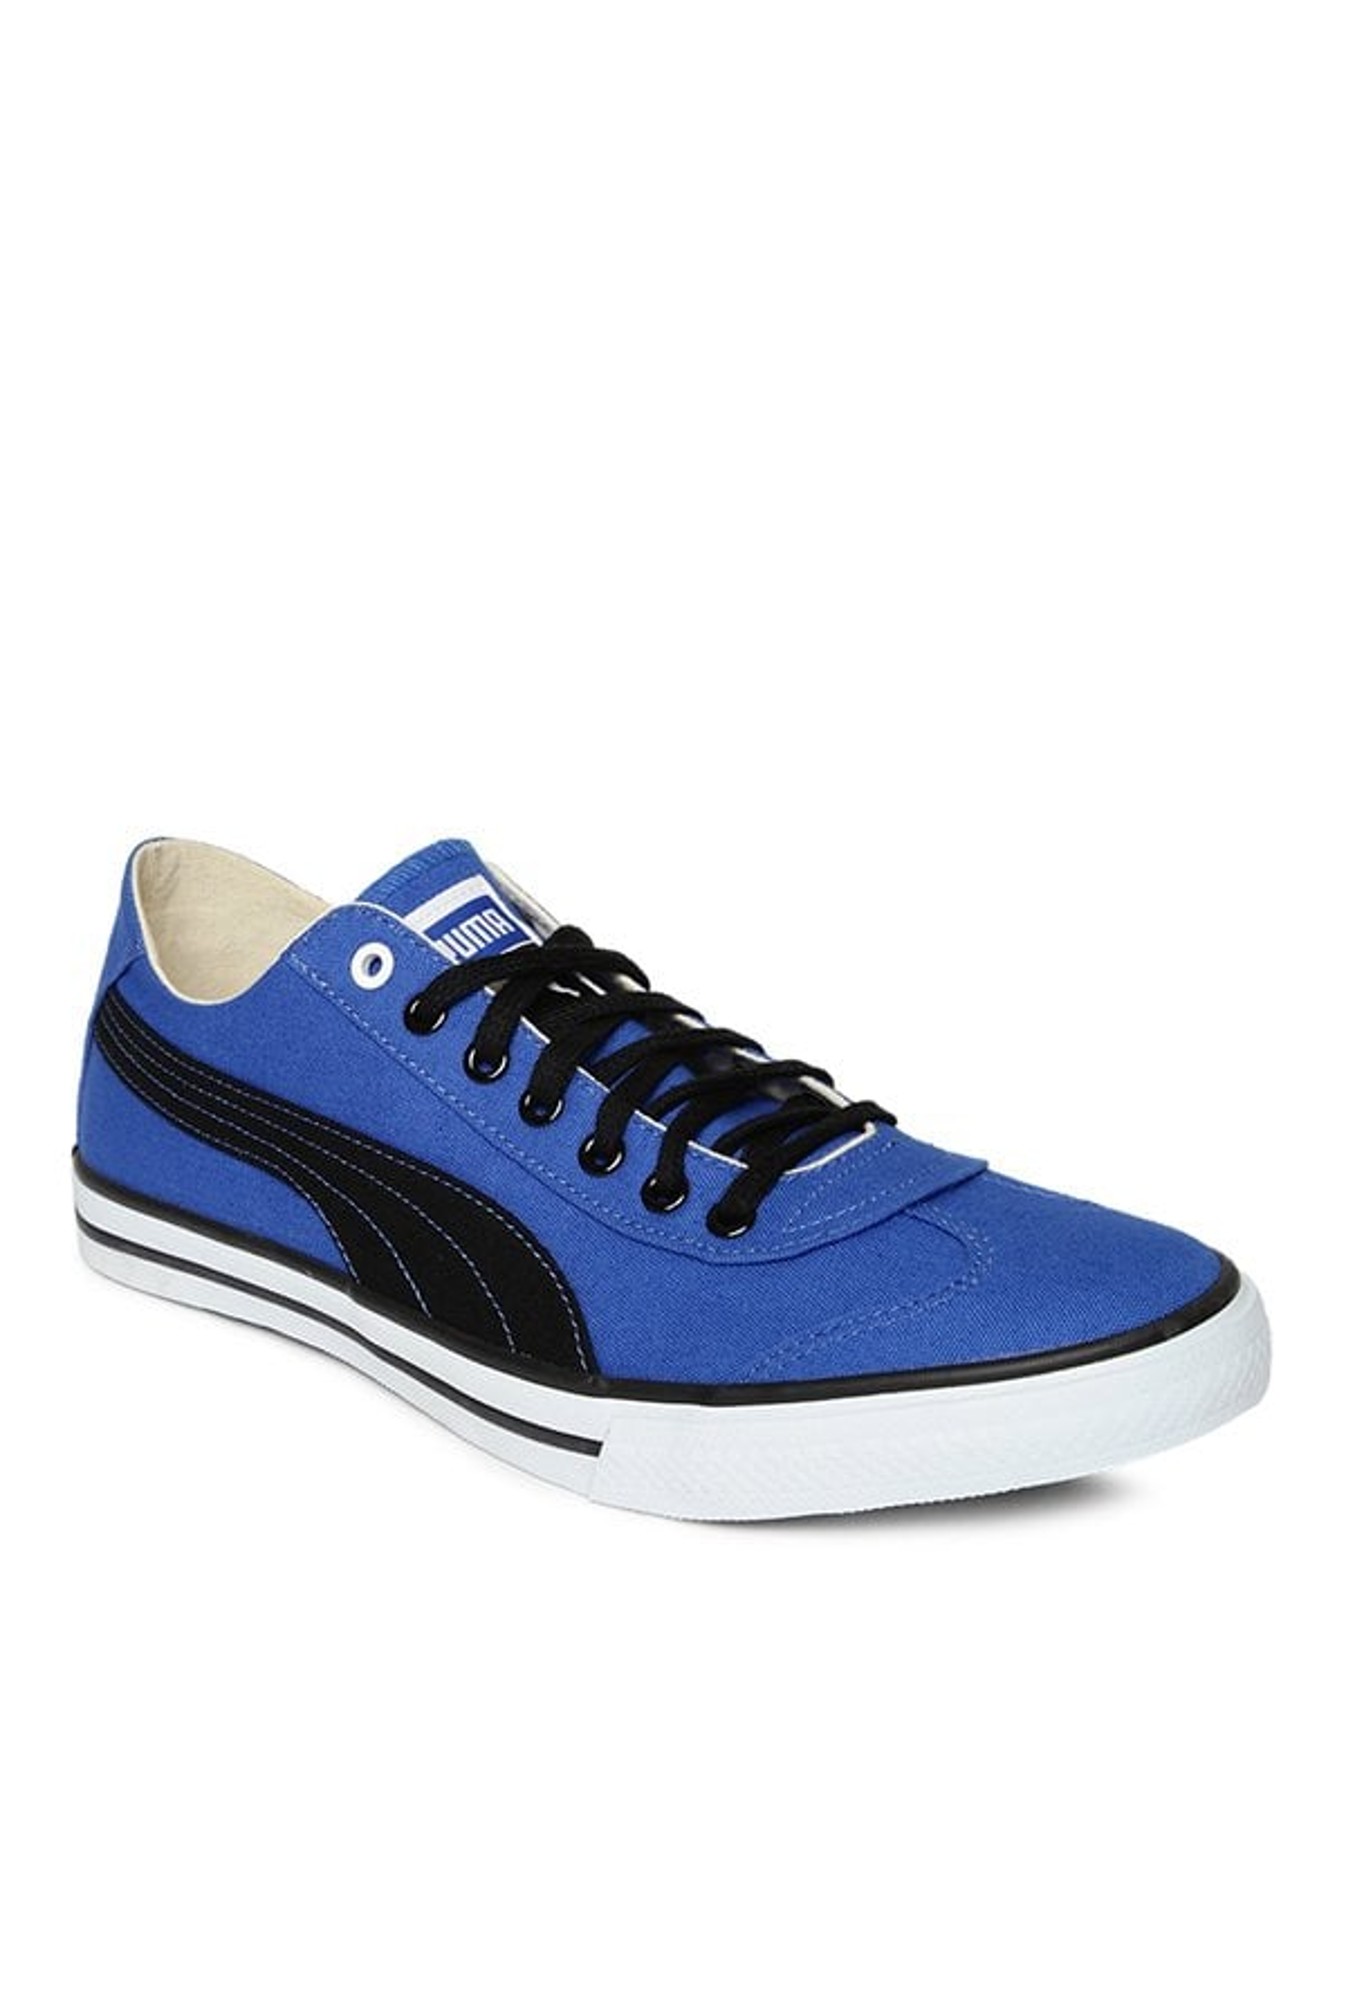 puma 917 lo dp blue sneakers